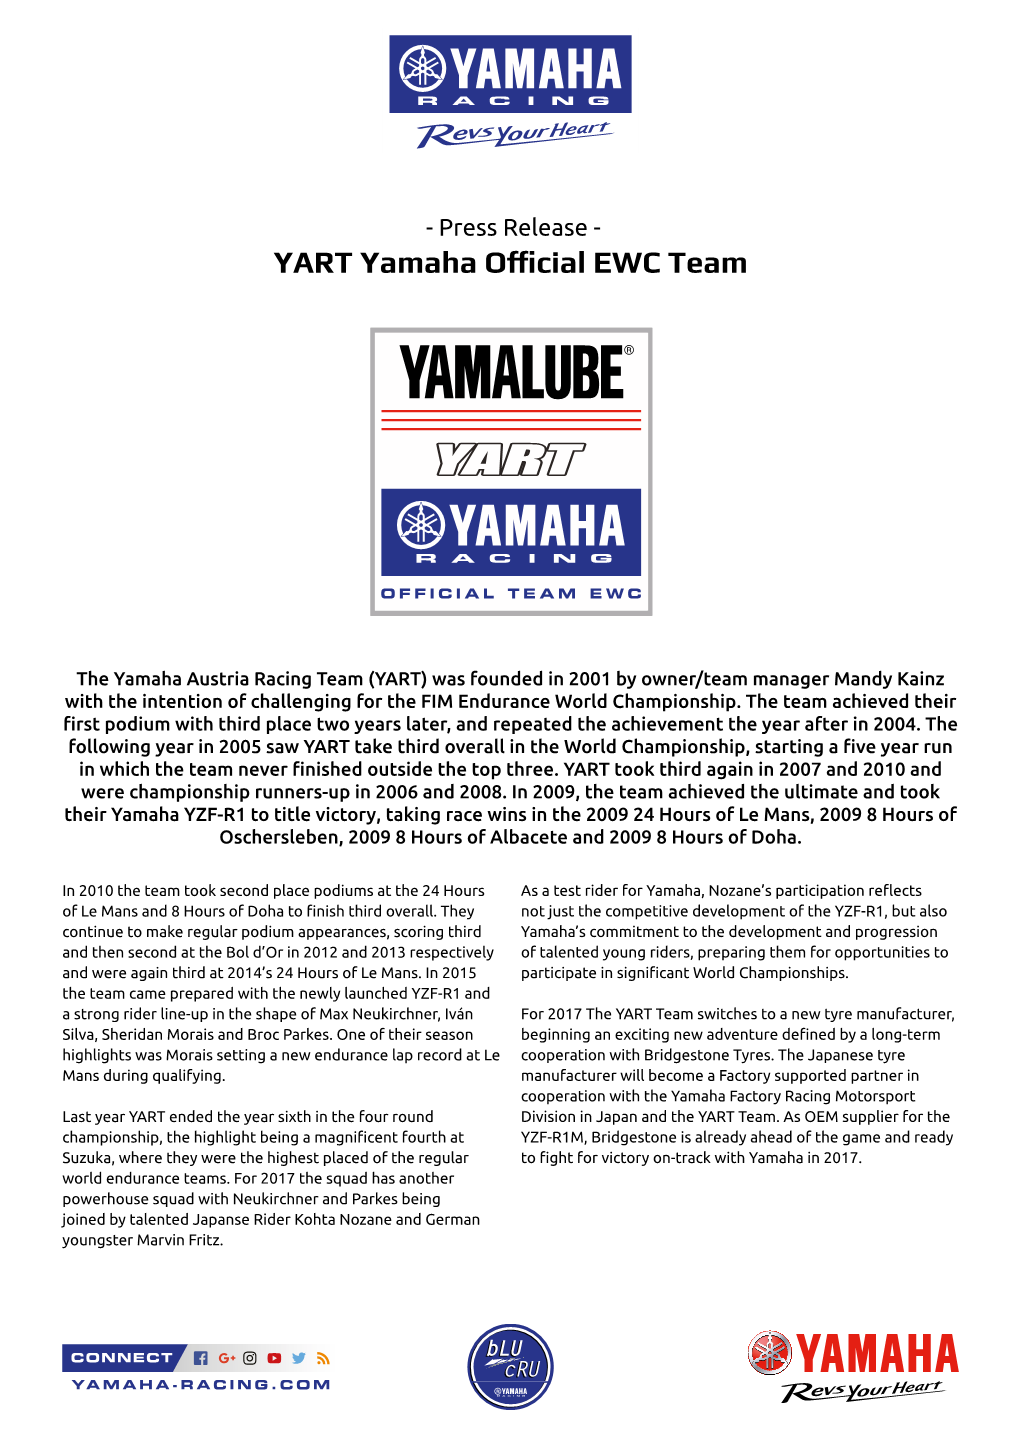 YART Yamaha Official EWC Team